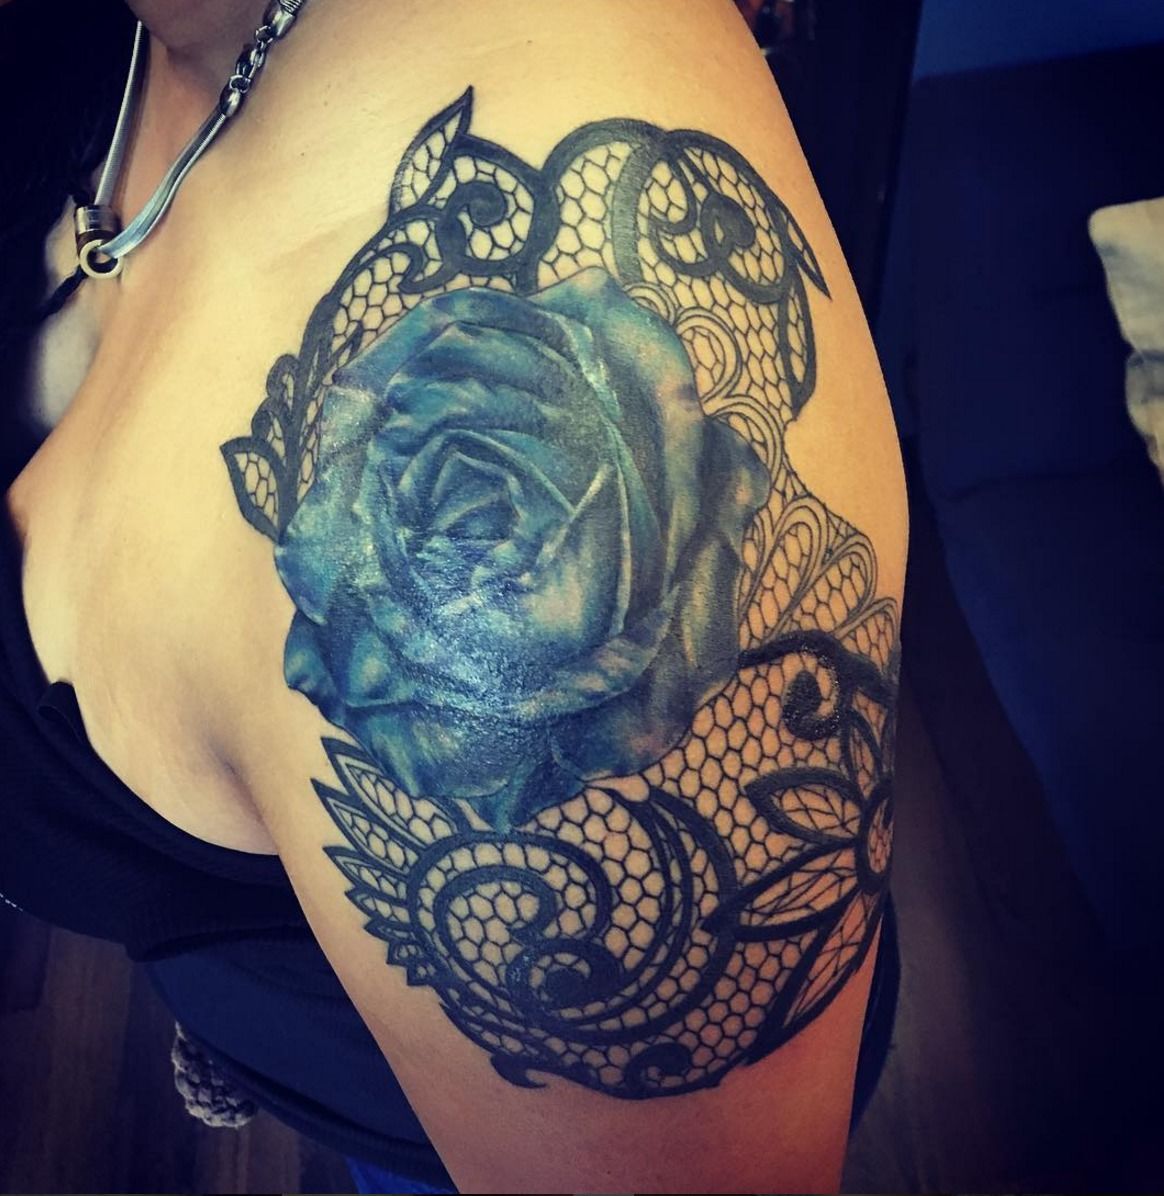 6pcs Mandala Flower Waterproof Temporary Tattoo Sticker Rose Lace For Women  Body  eBay